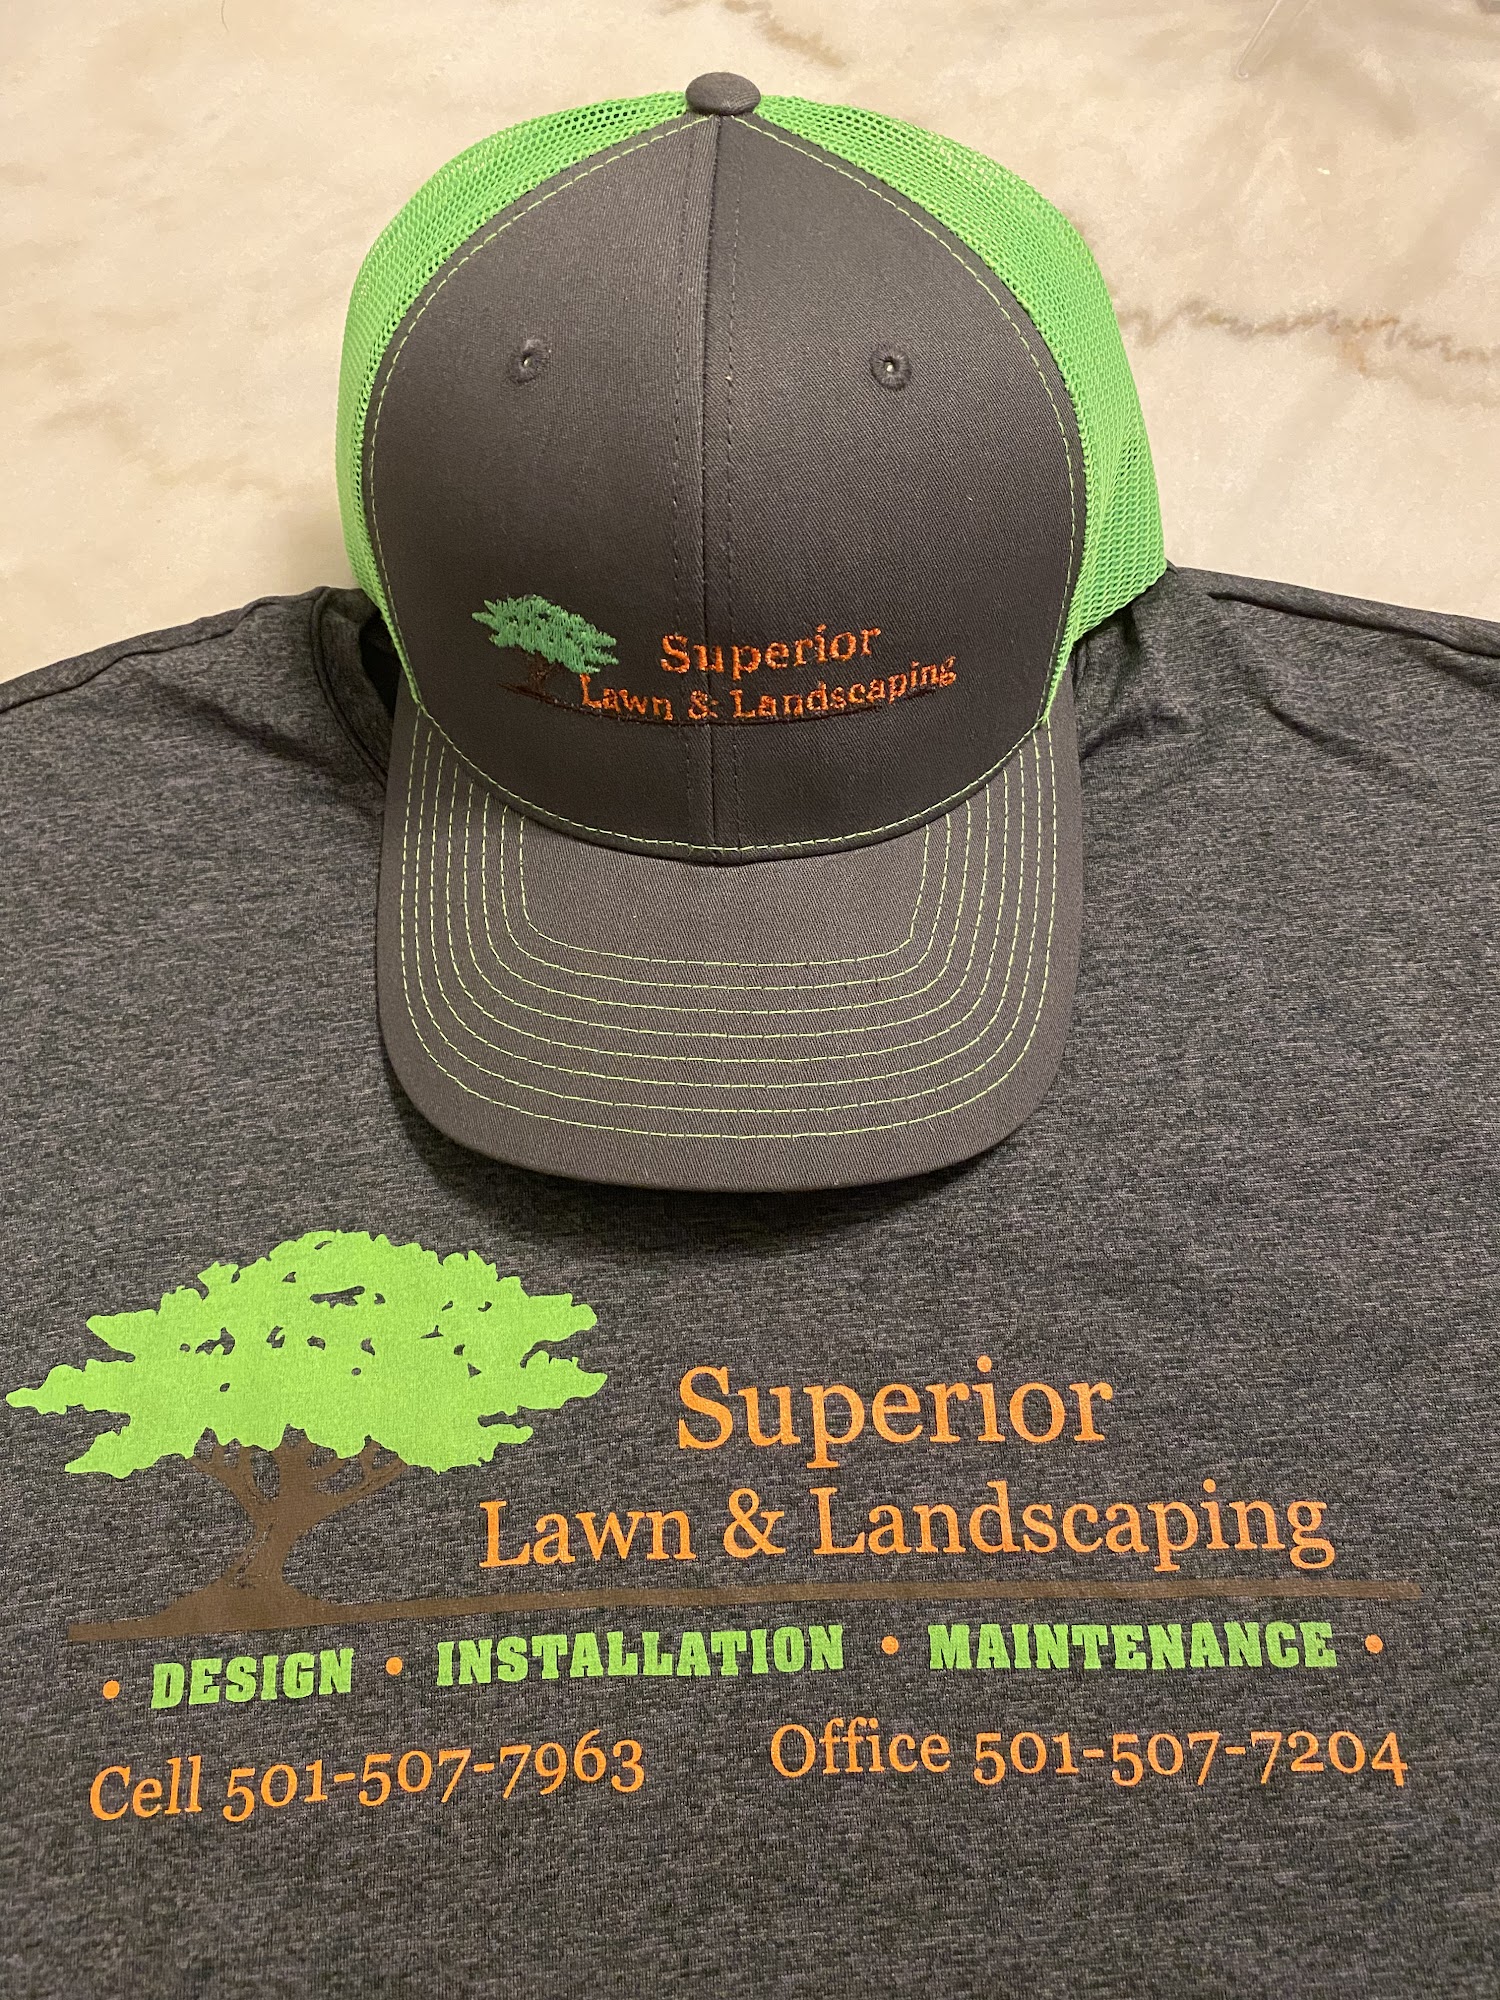 Superior lawn & landscaping - Lawn & Landscape Installation Contractors